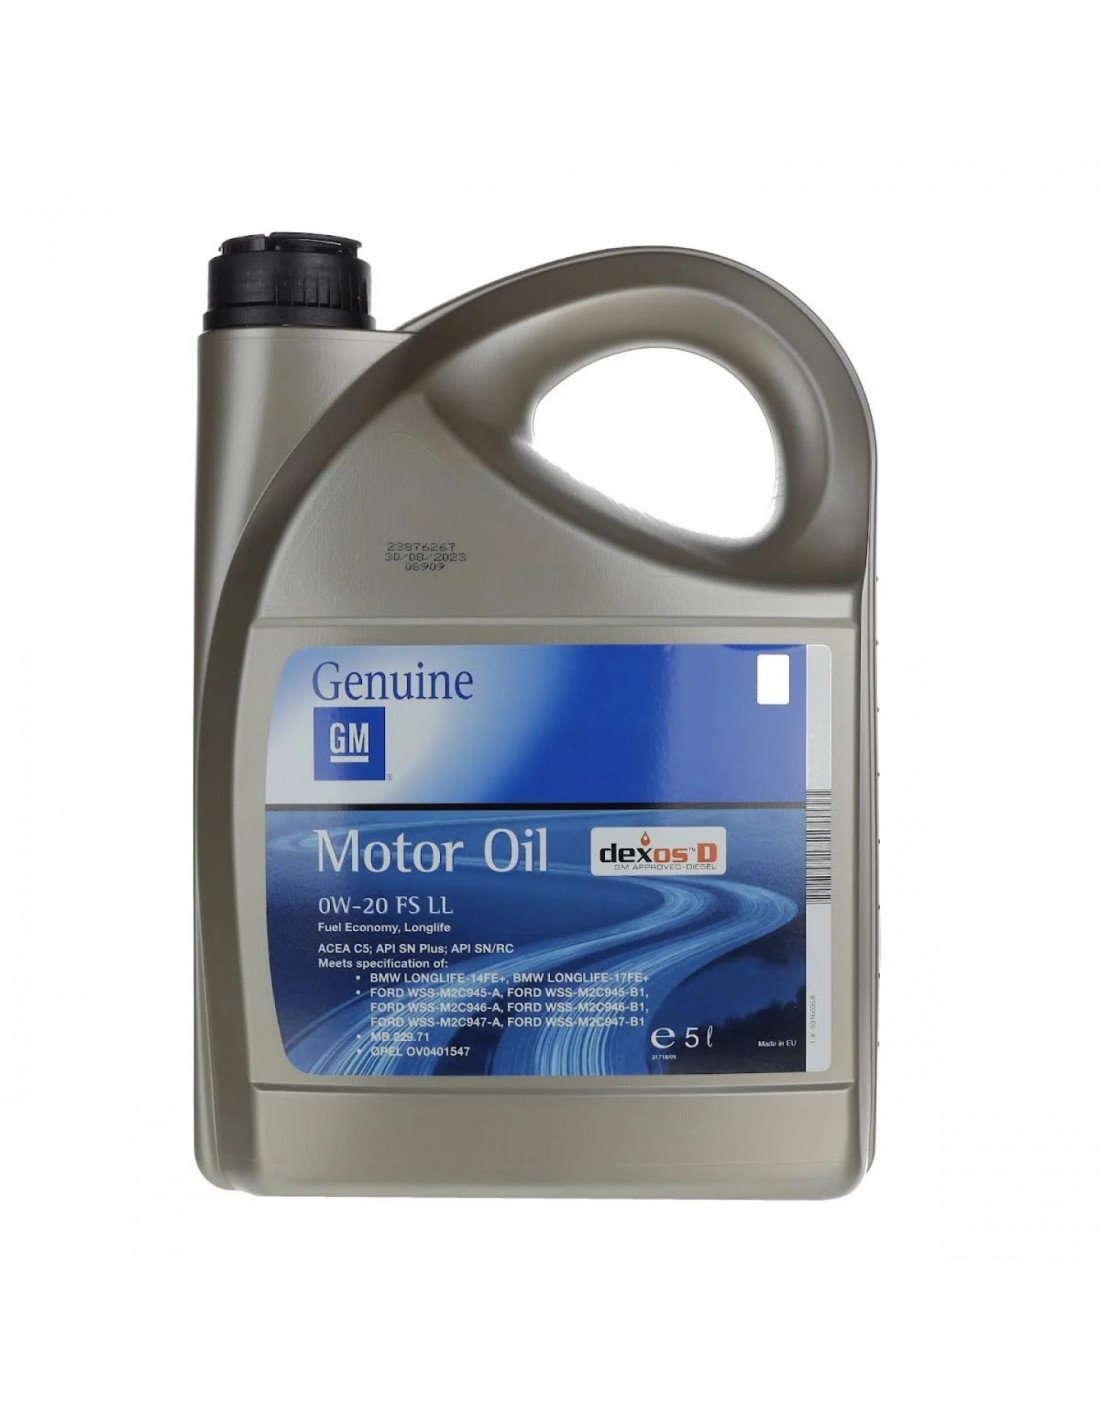 OPEL GM MOTOR OIL 0W-20 1L/5L